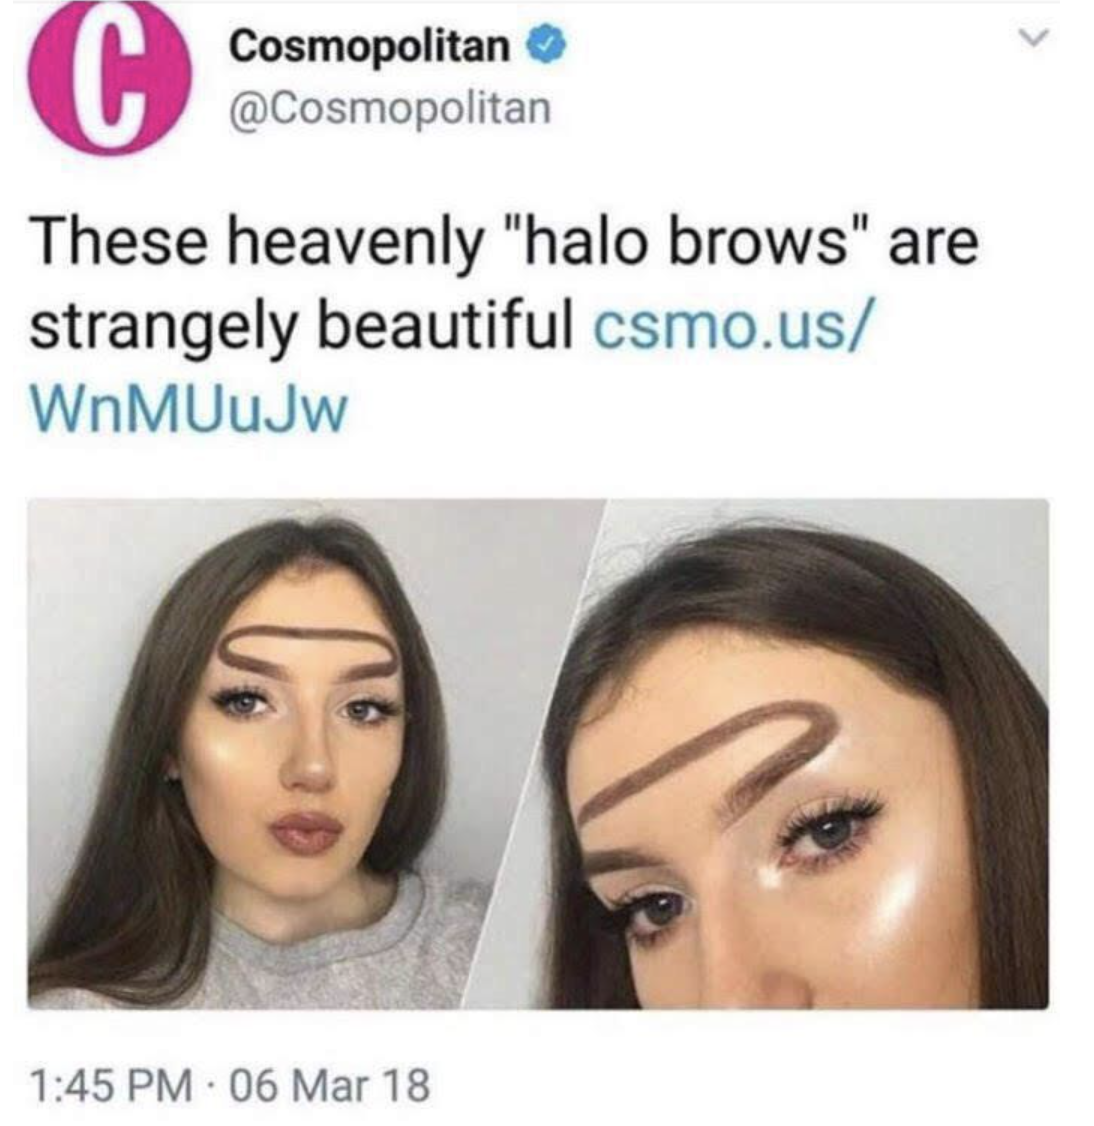 cosmopolitan meme - C Cosmopolitan These heavenly "halo brows" are strangely beautiful csmo.us WnMUUJw 06 Mar 18